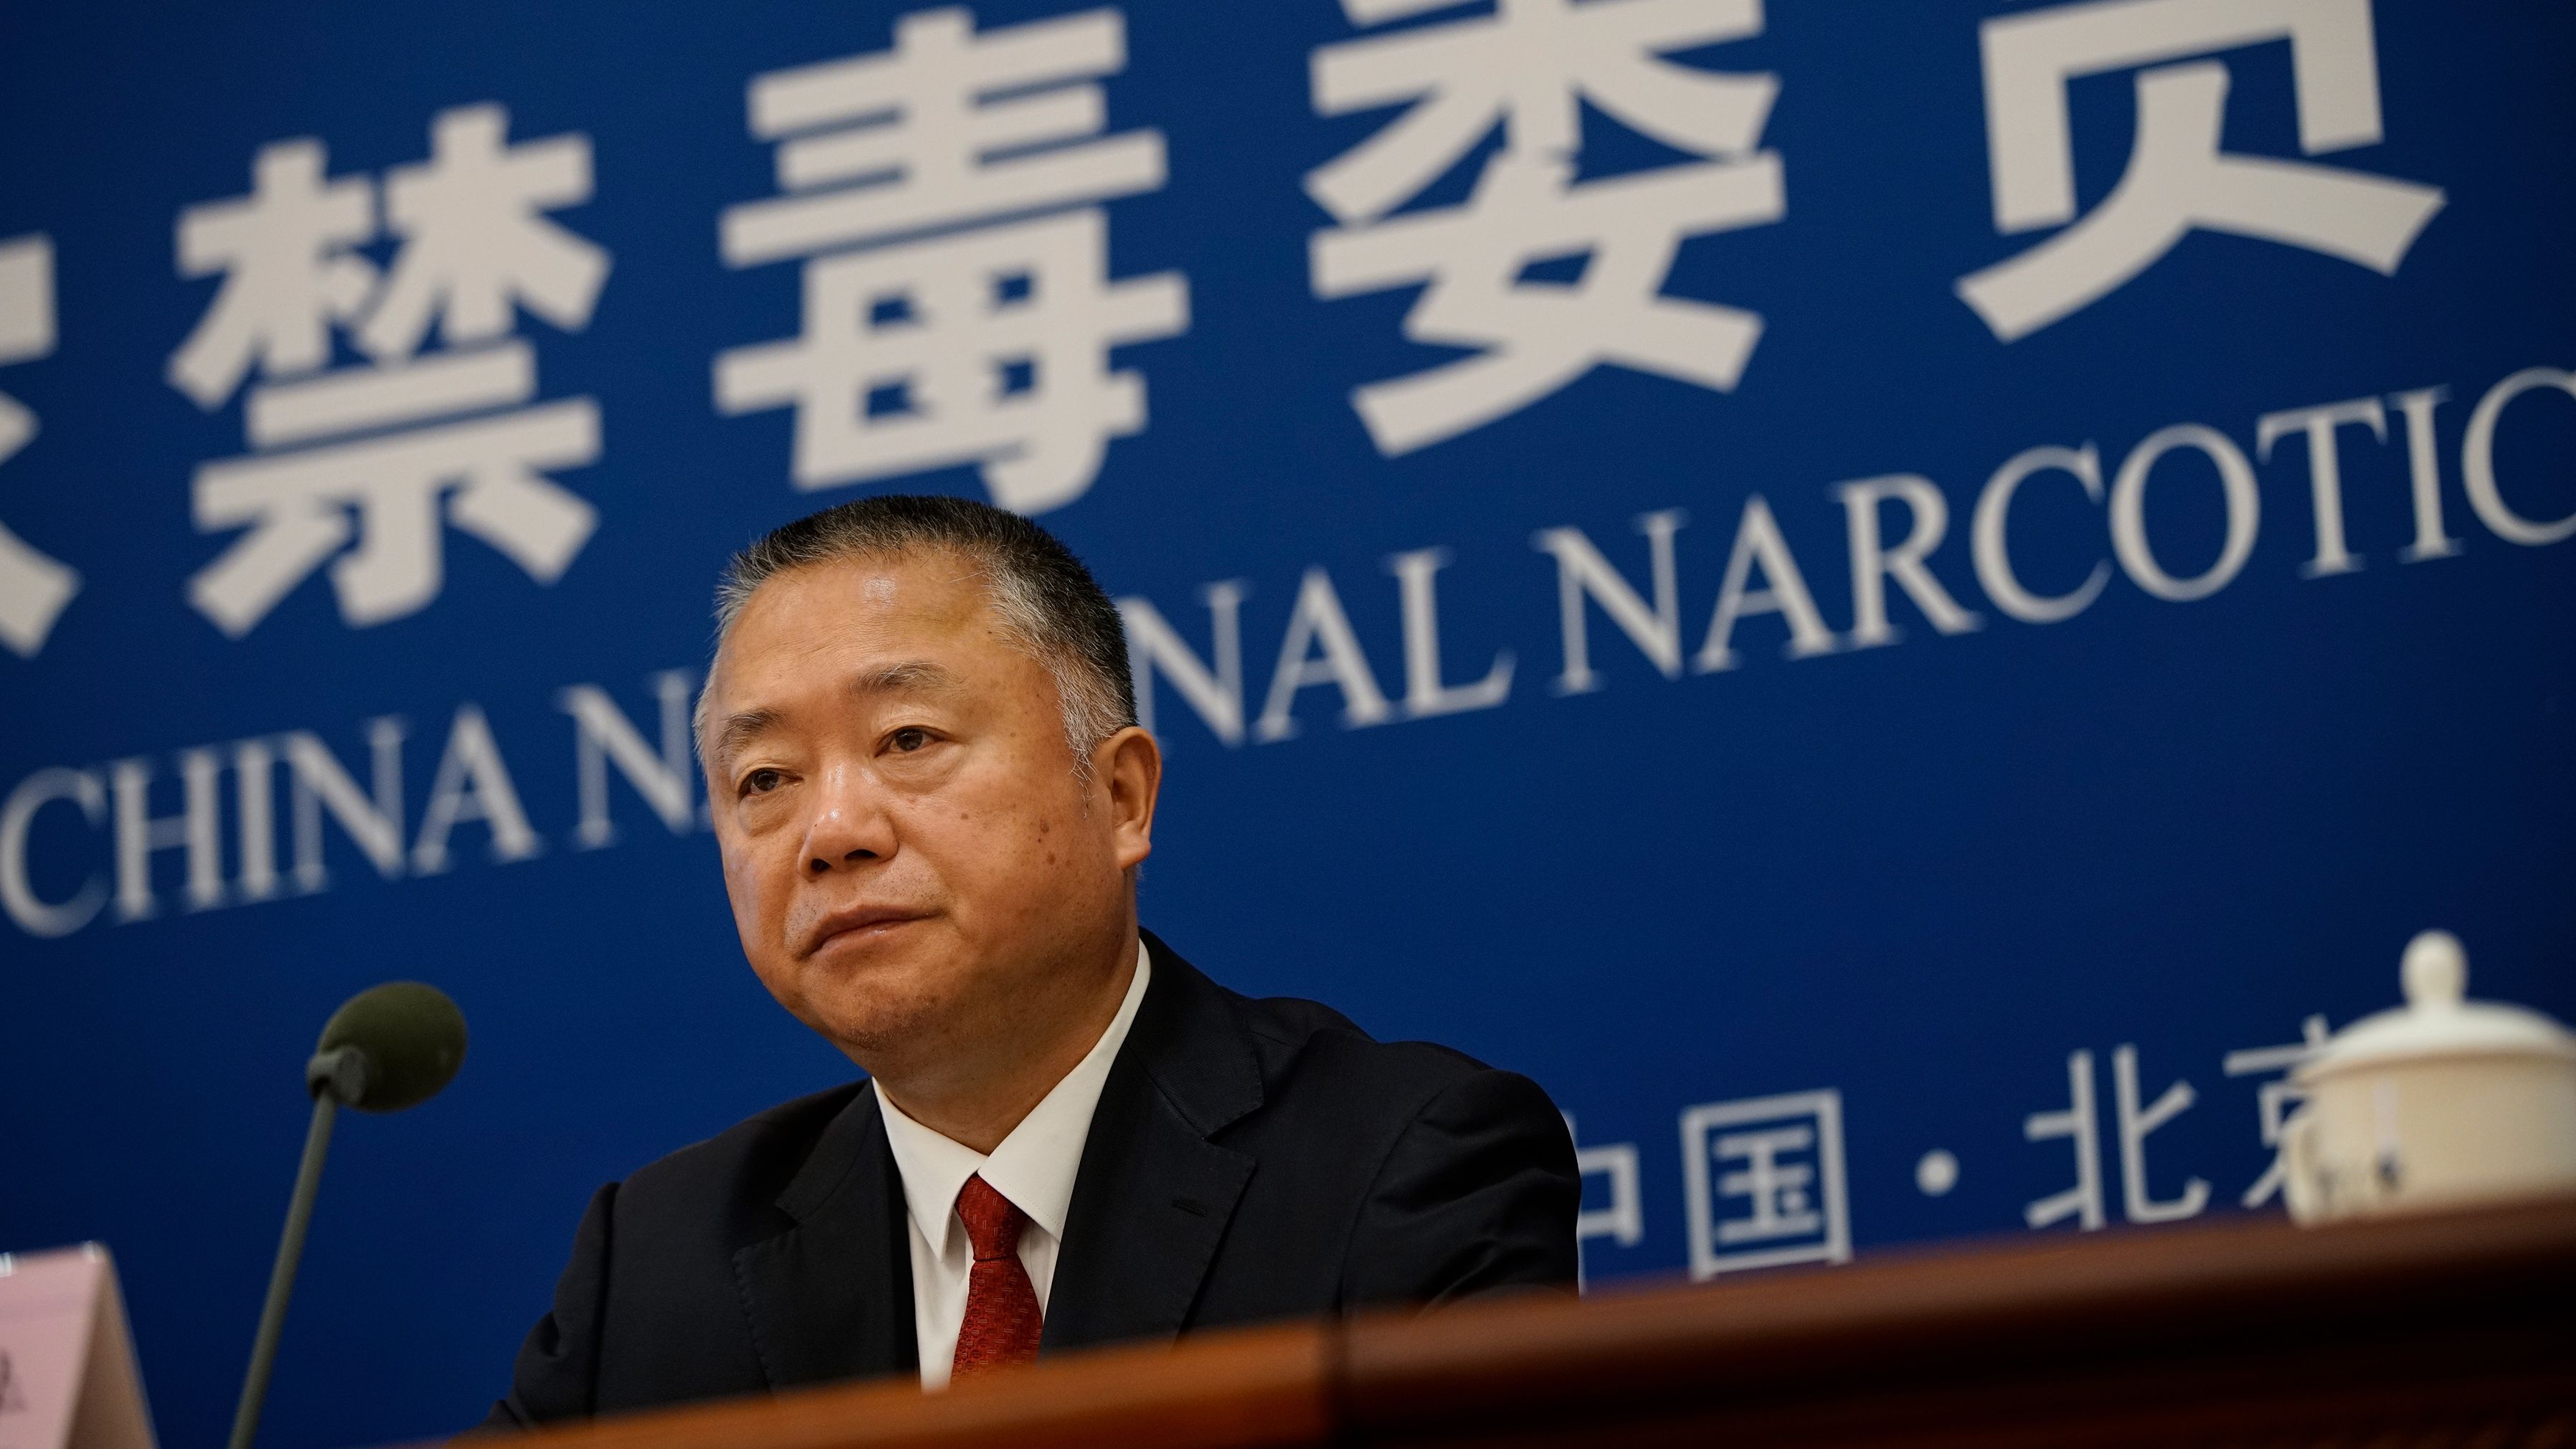 Liu Yuejin speaking during a press conference in Beijing in June.